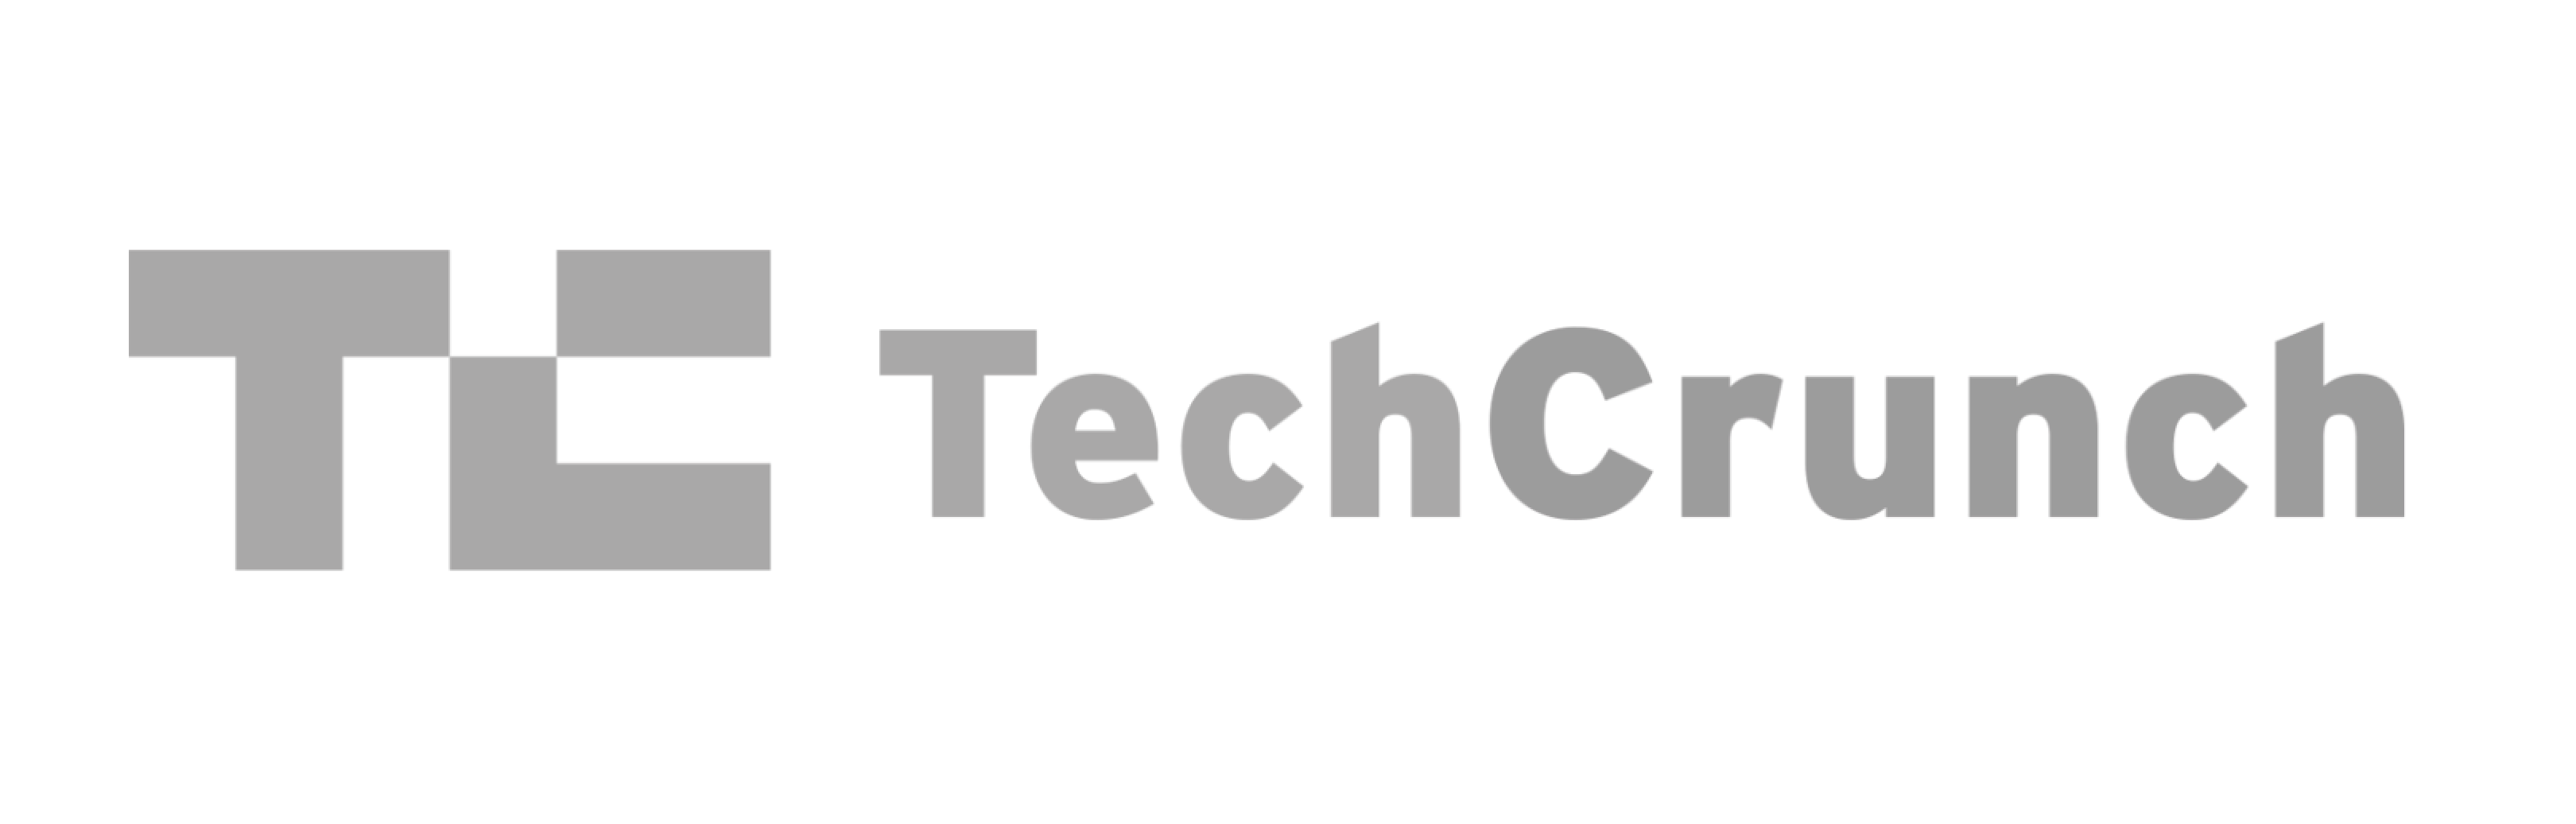 TechCrunch logo
